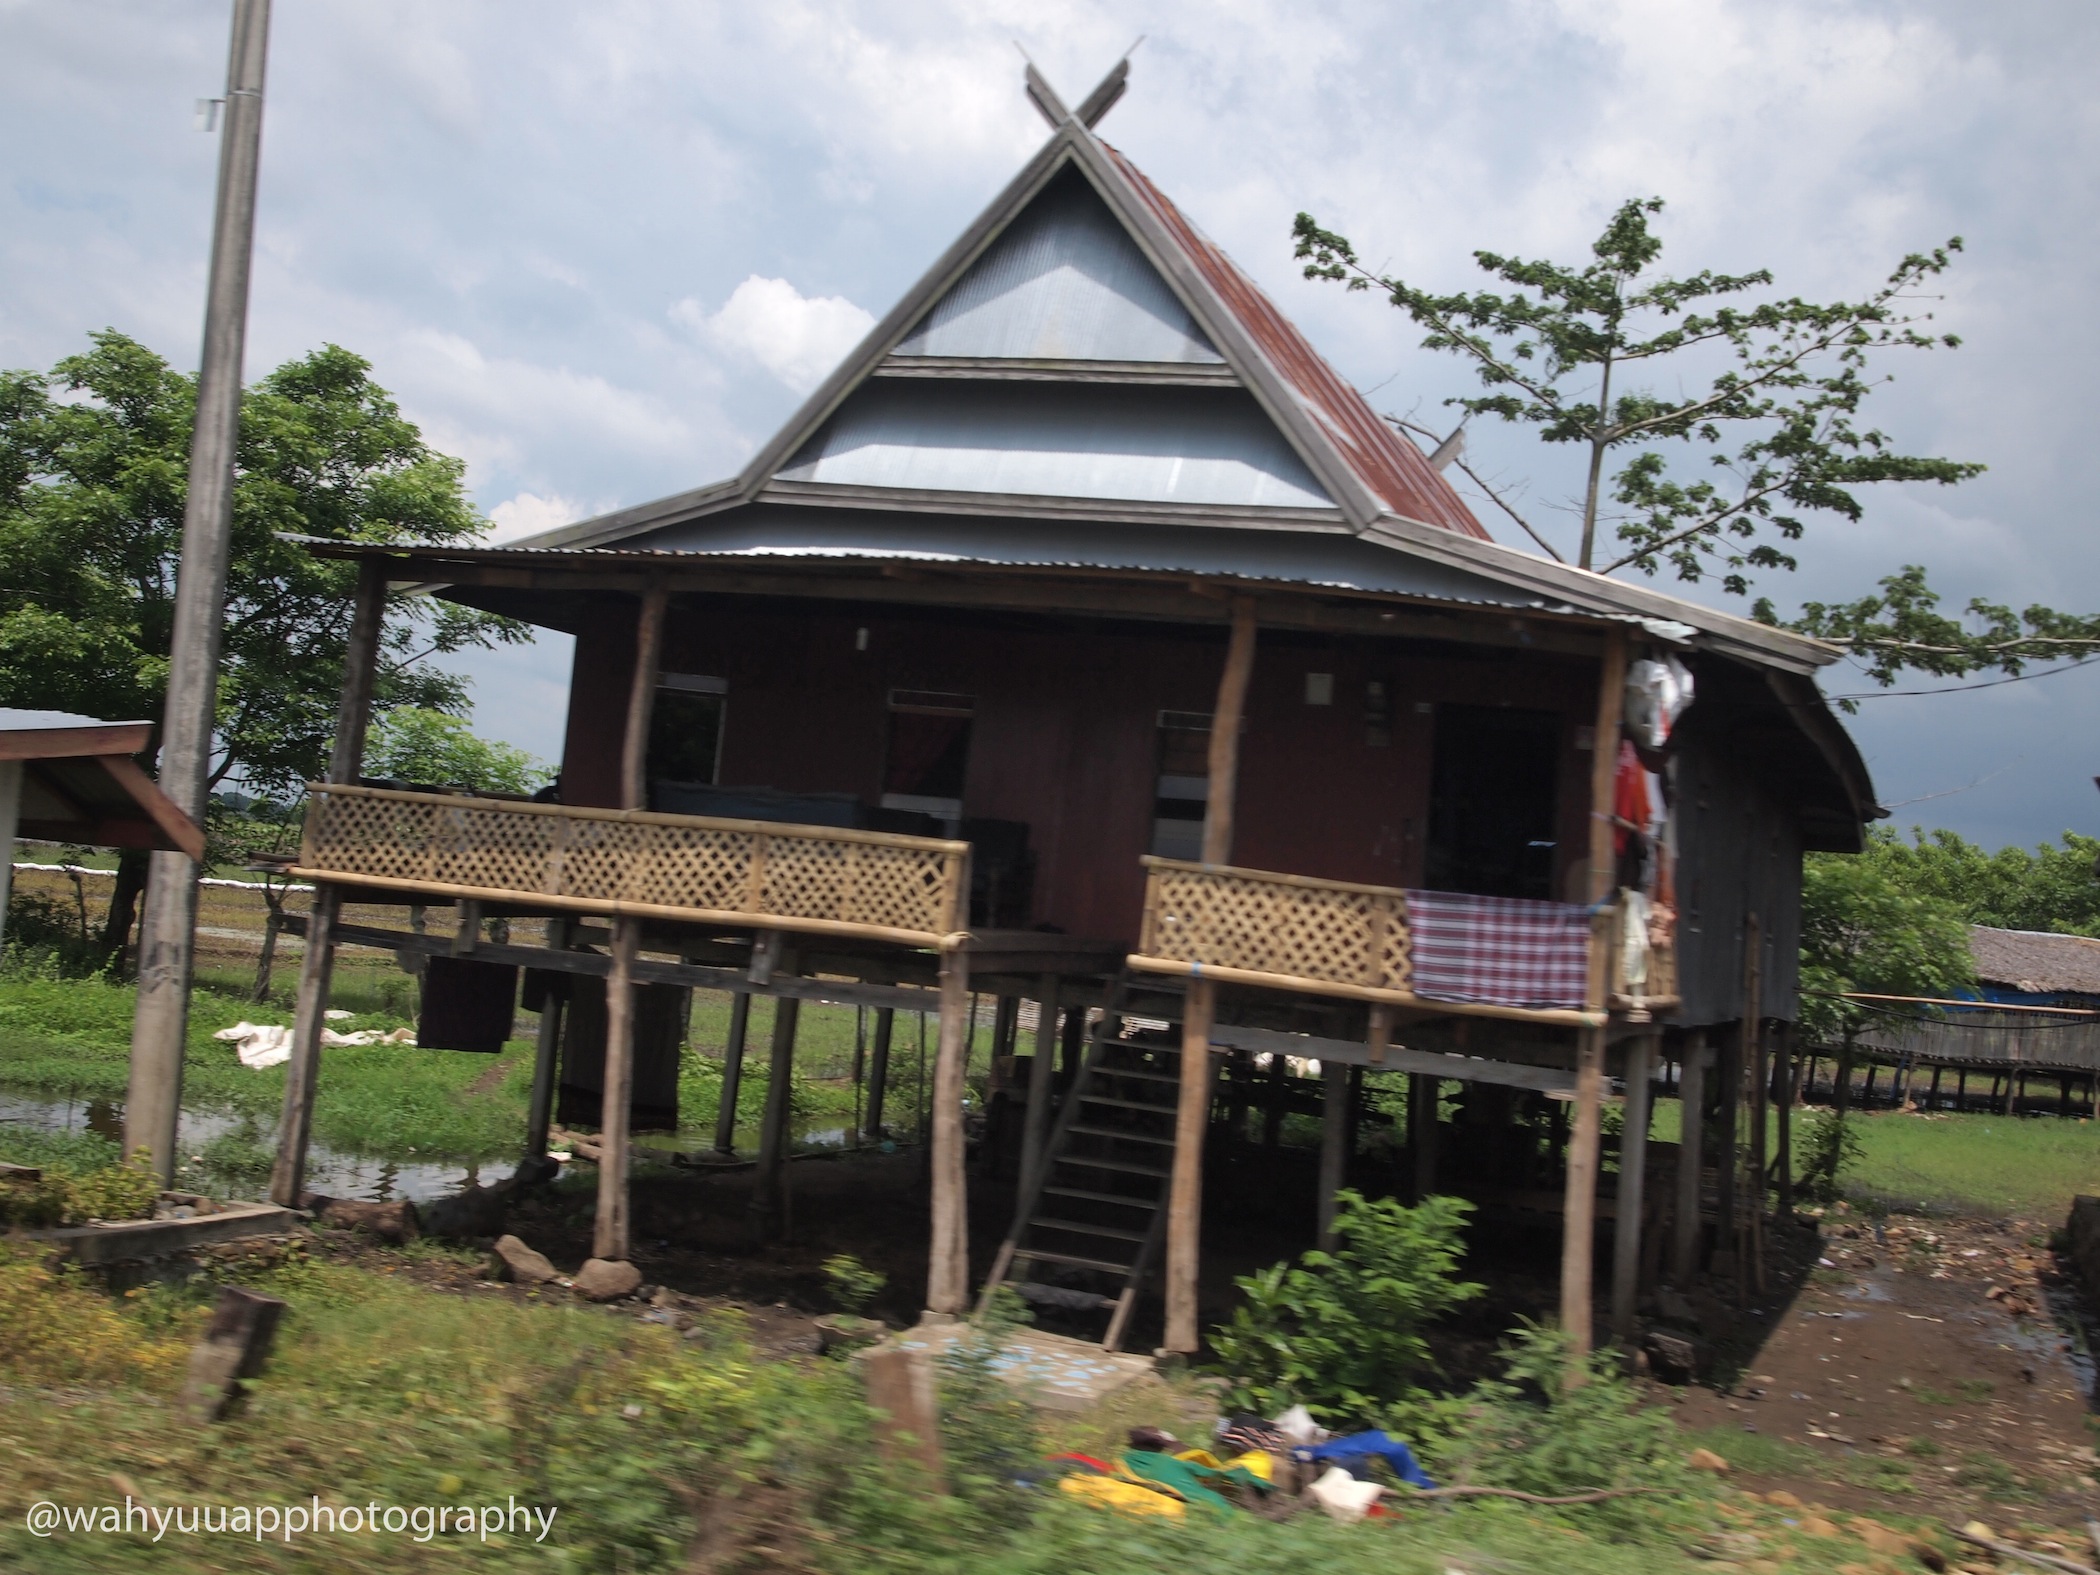 Rumah Panggung Sulawesi Selatan  inisayadanhidupsaya